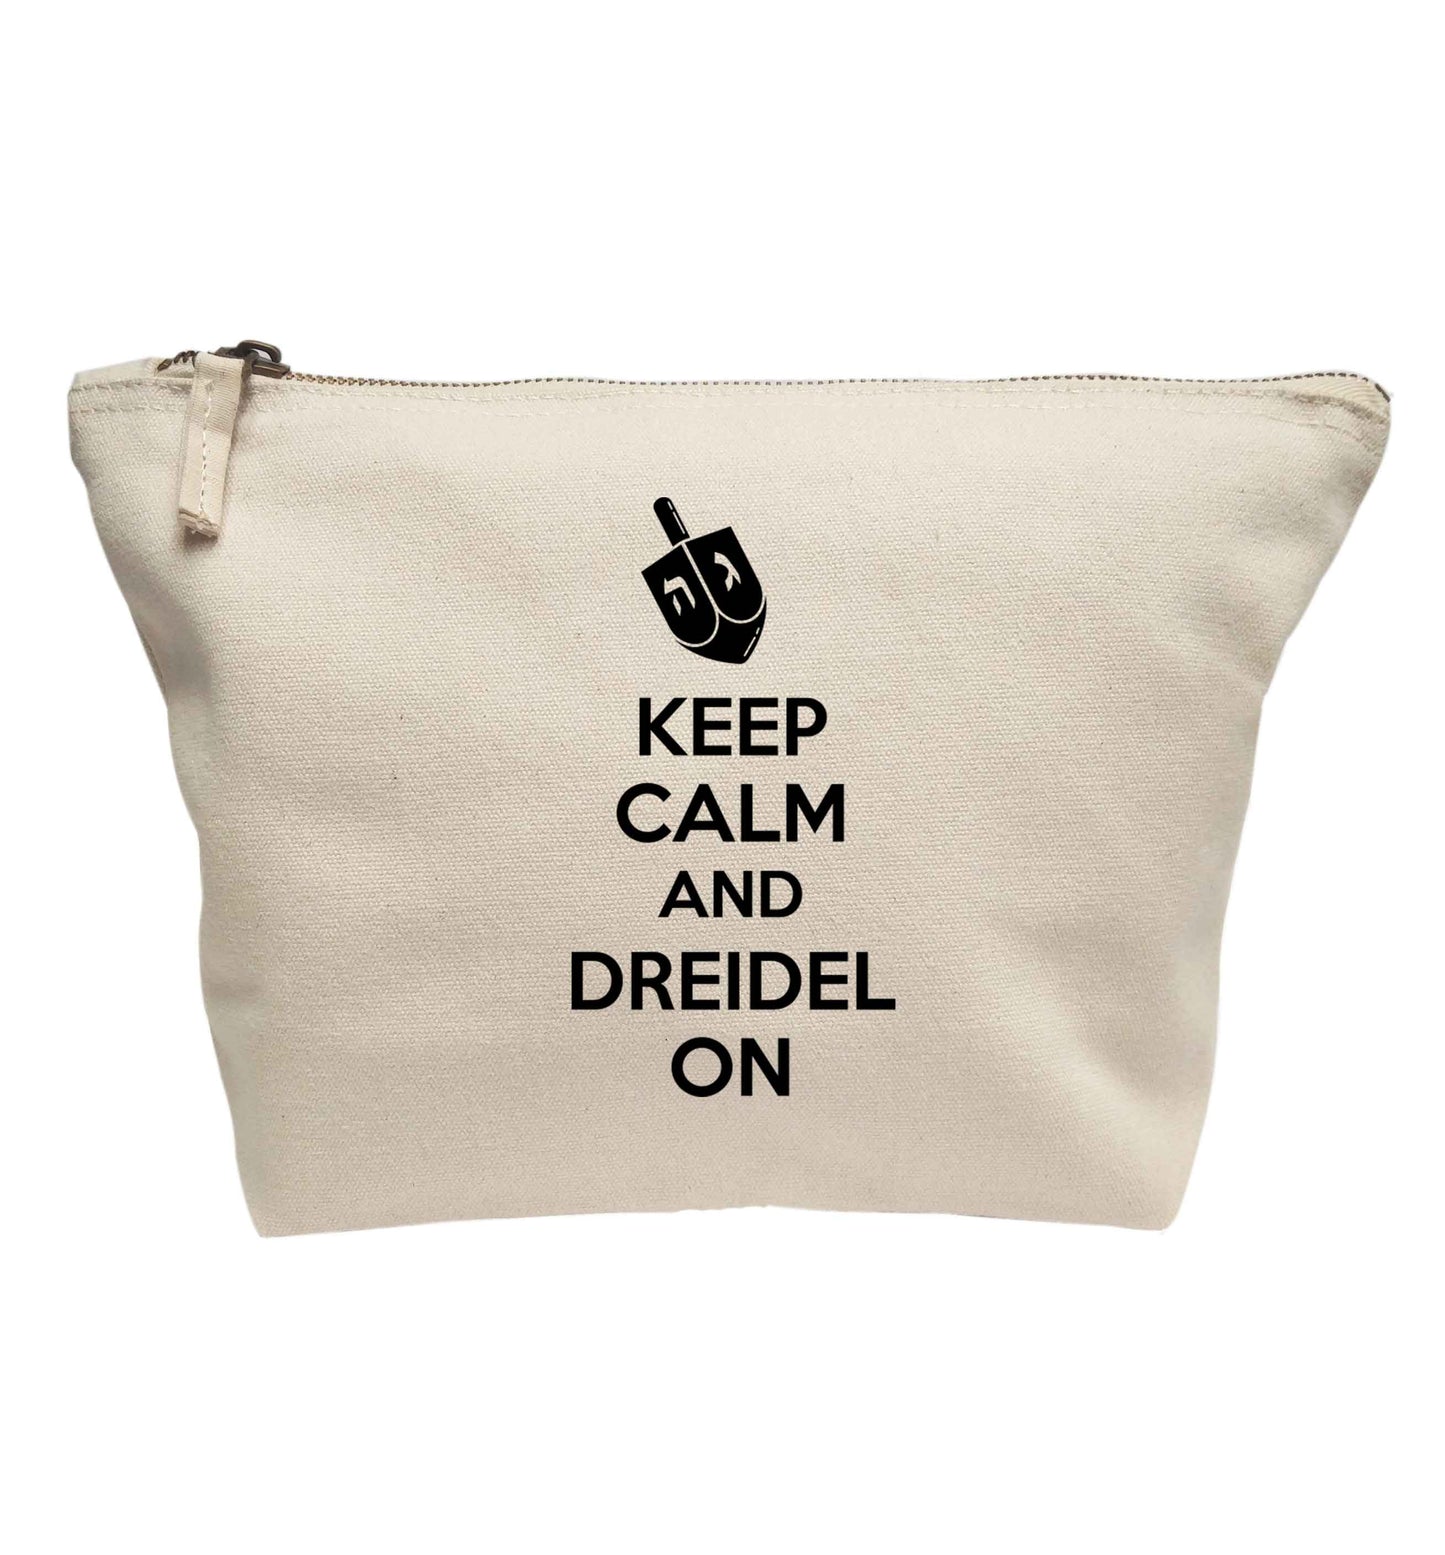 Keep calm and dreidel on | Makeup / wash bag